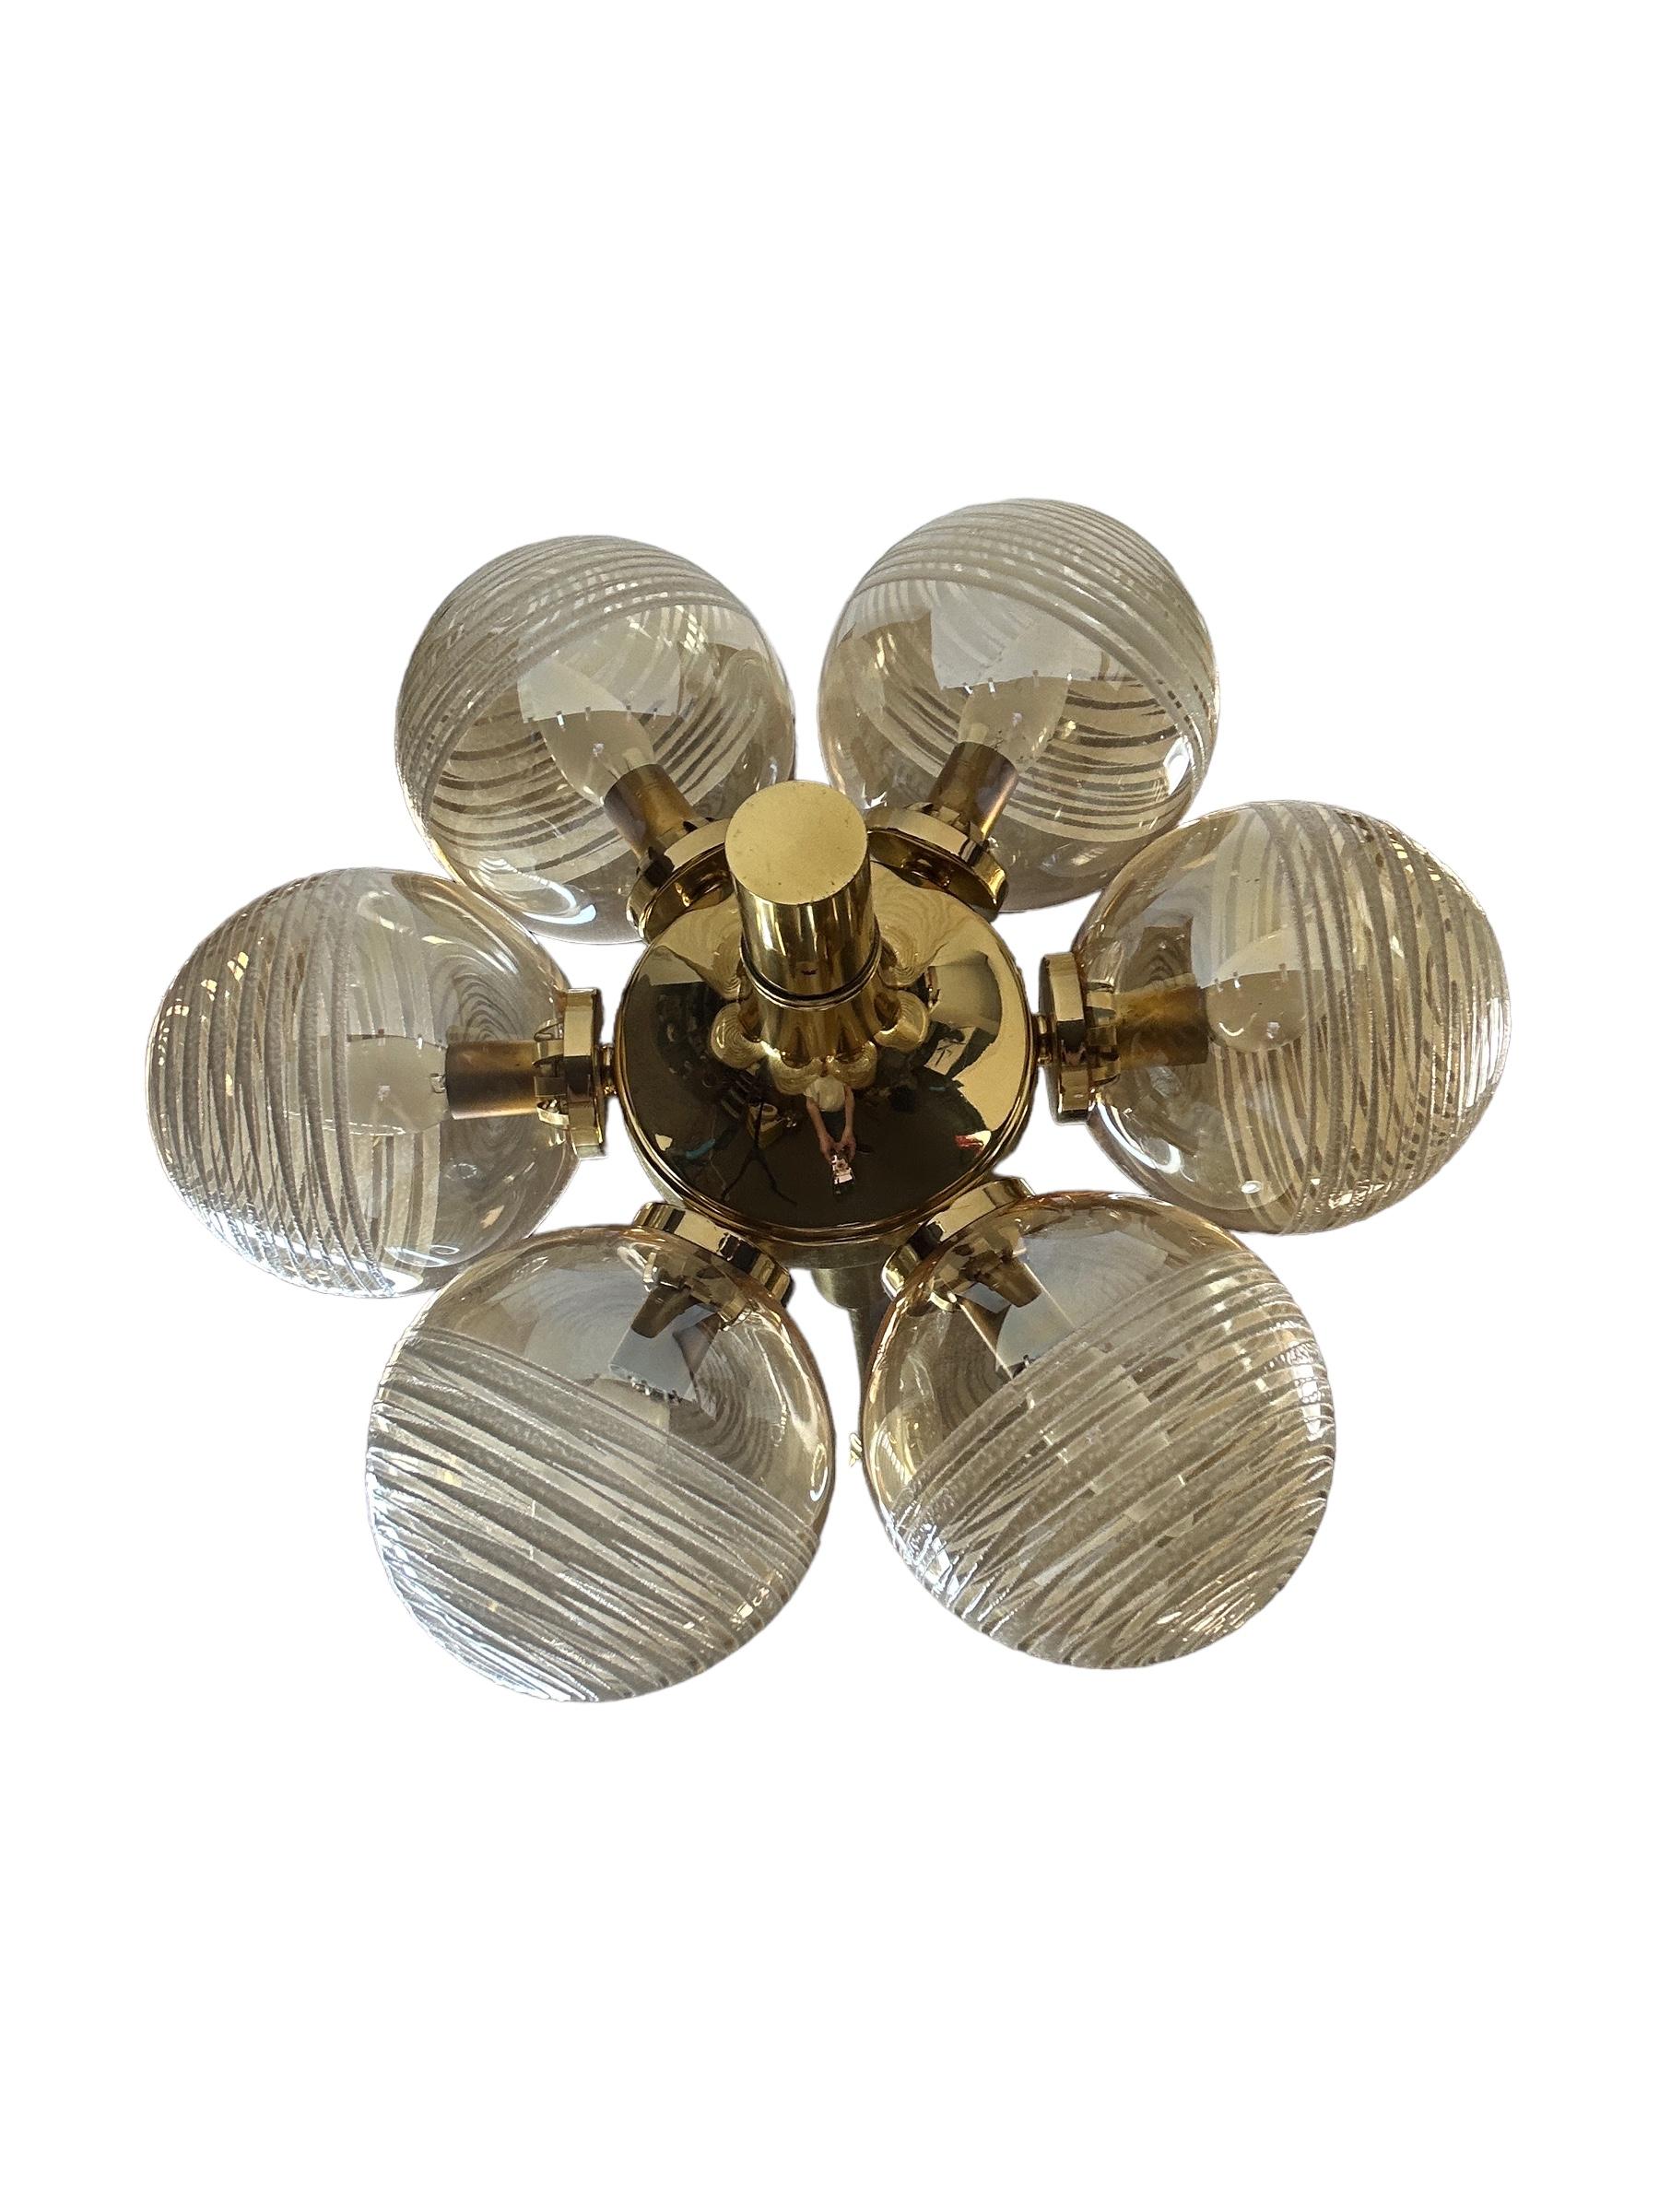 6 Light Sputnik Orbit Space Age Brass Swirl Glass Ball Chandelier Germany, 1970s For Sale 4